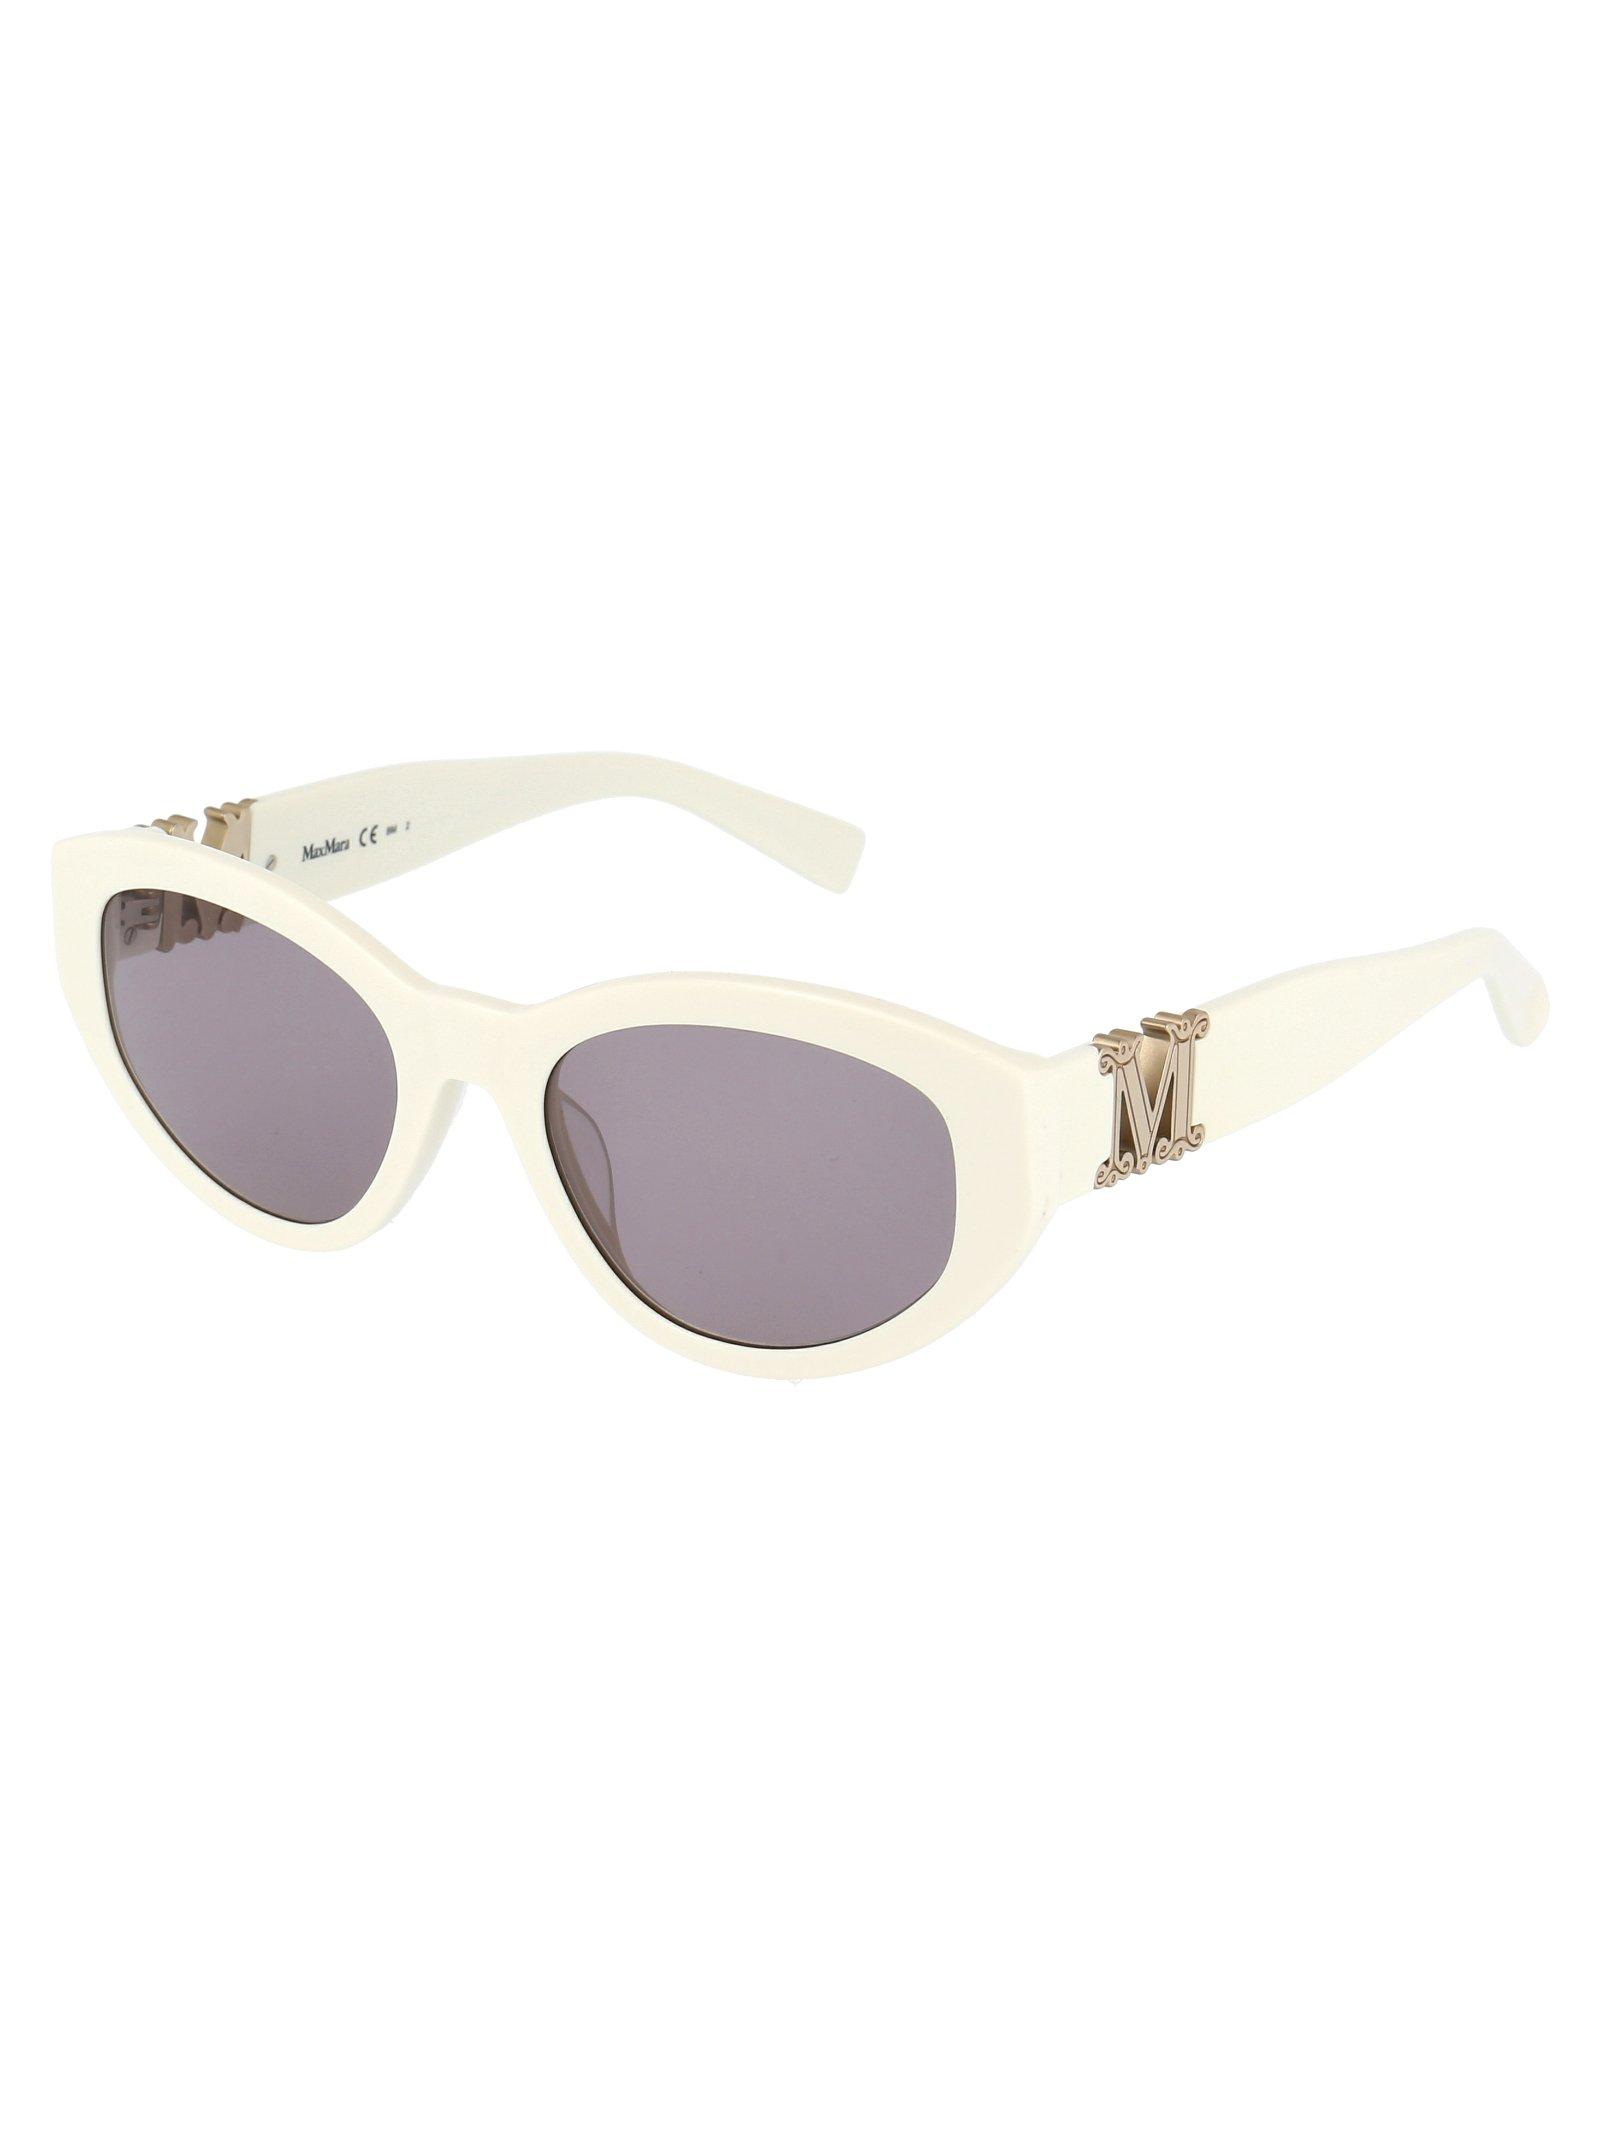 Max Mara Oval Frame Sunglasses in White - Lyst